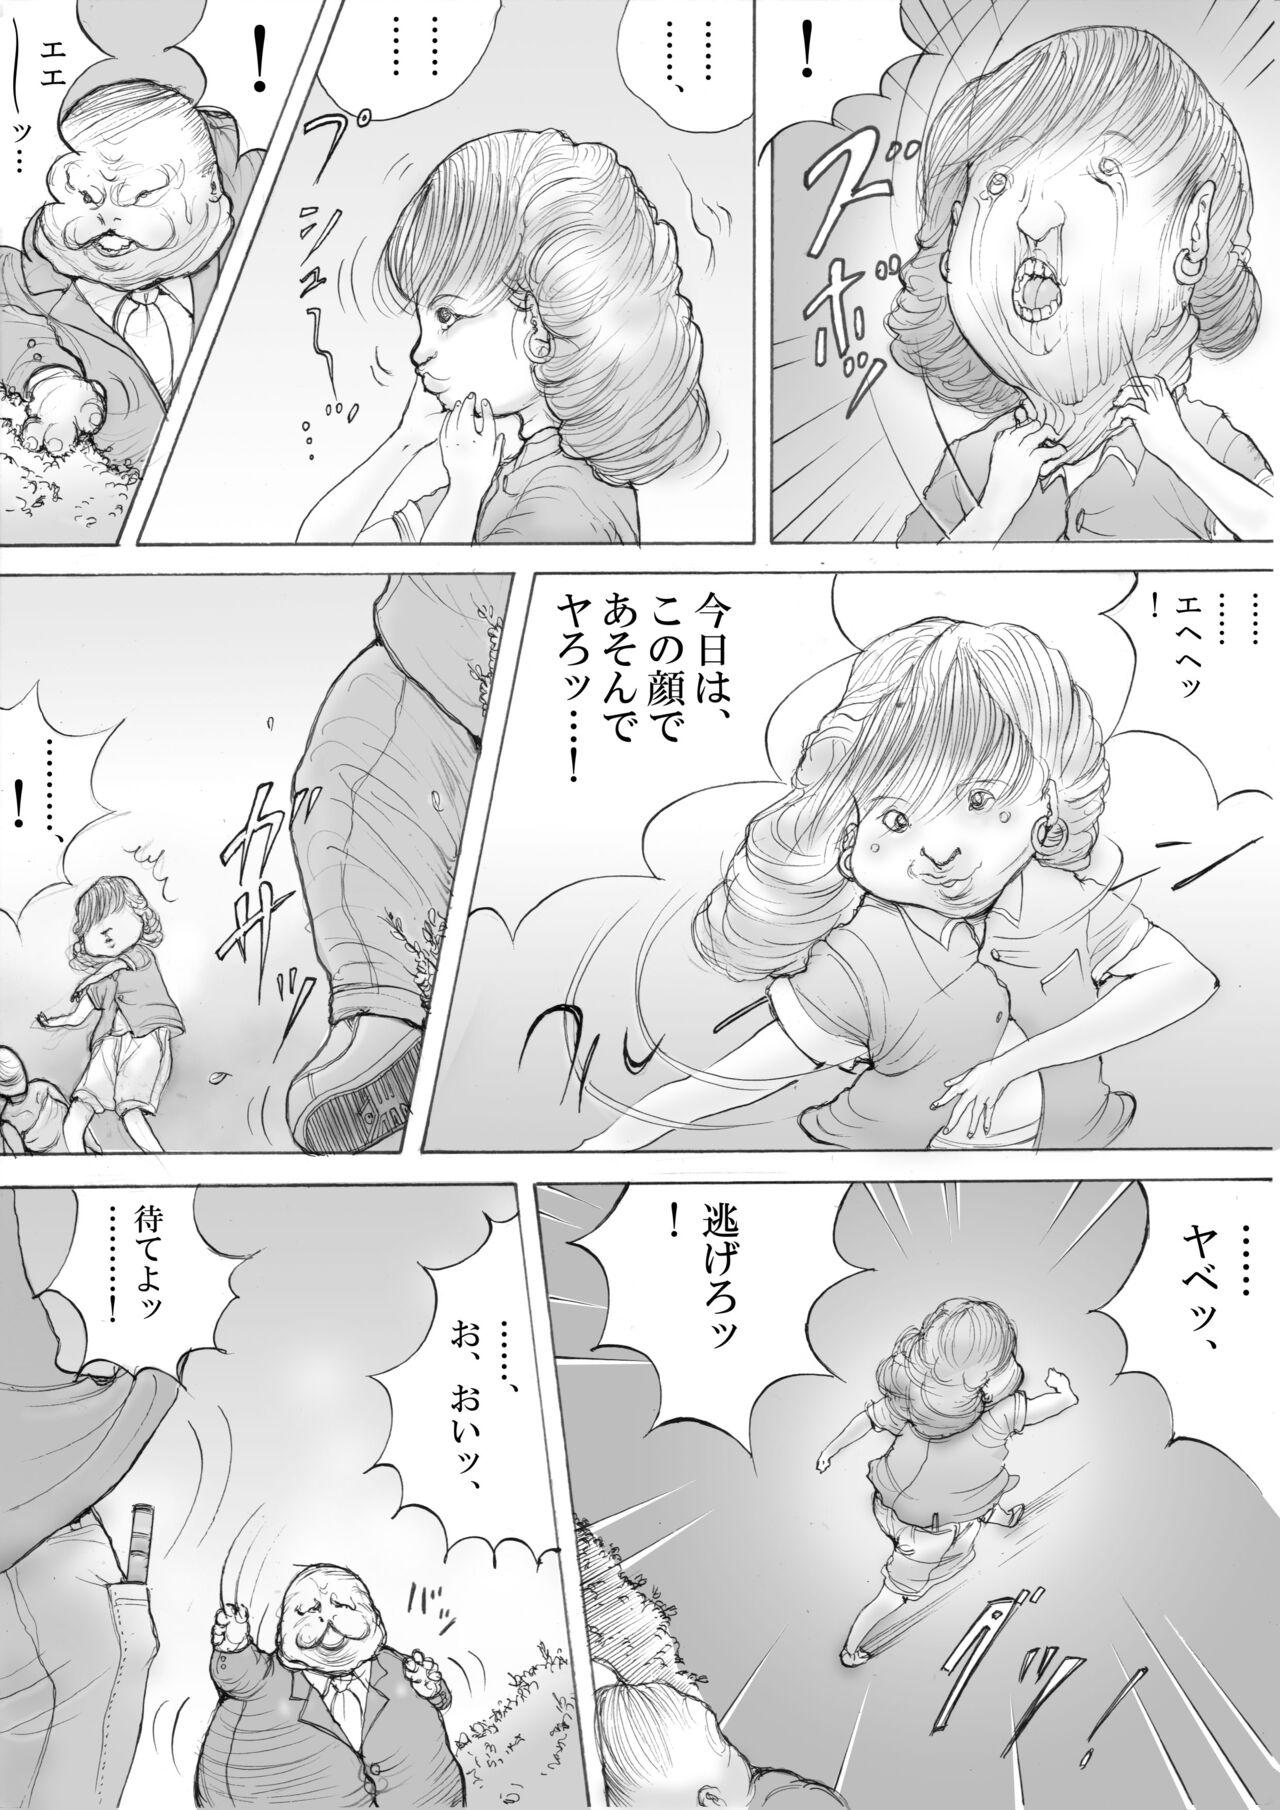 Spy Cam Horror Manga 7 Fucks - Page 4